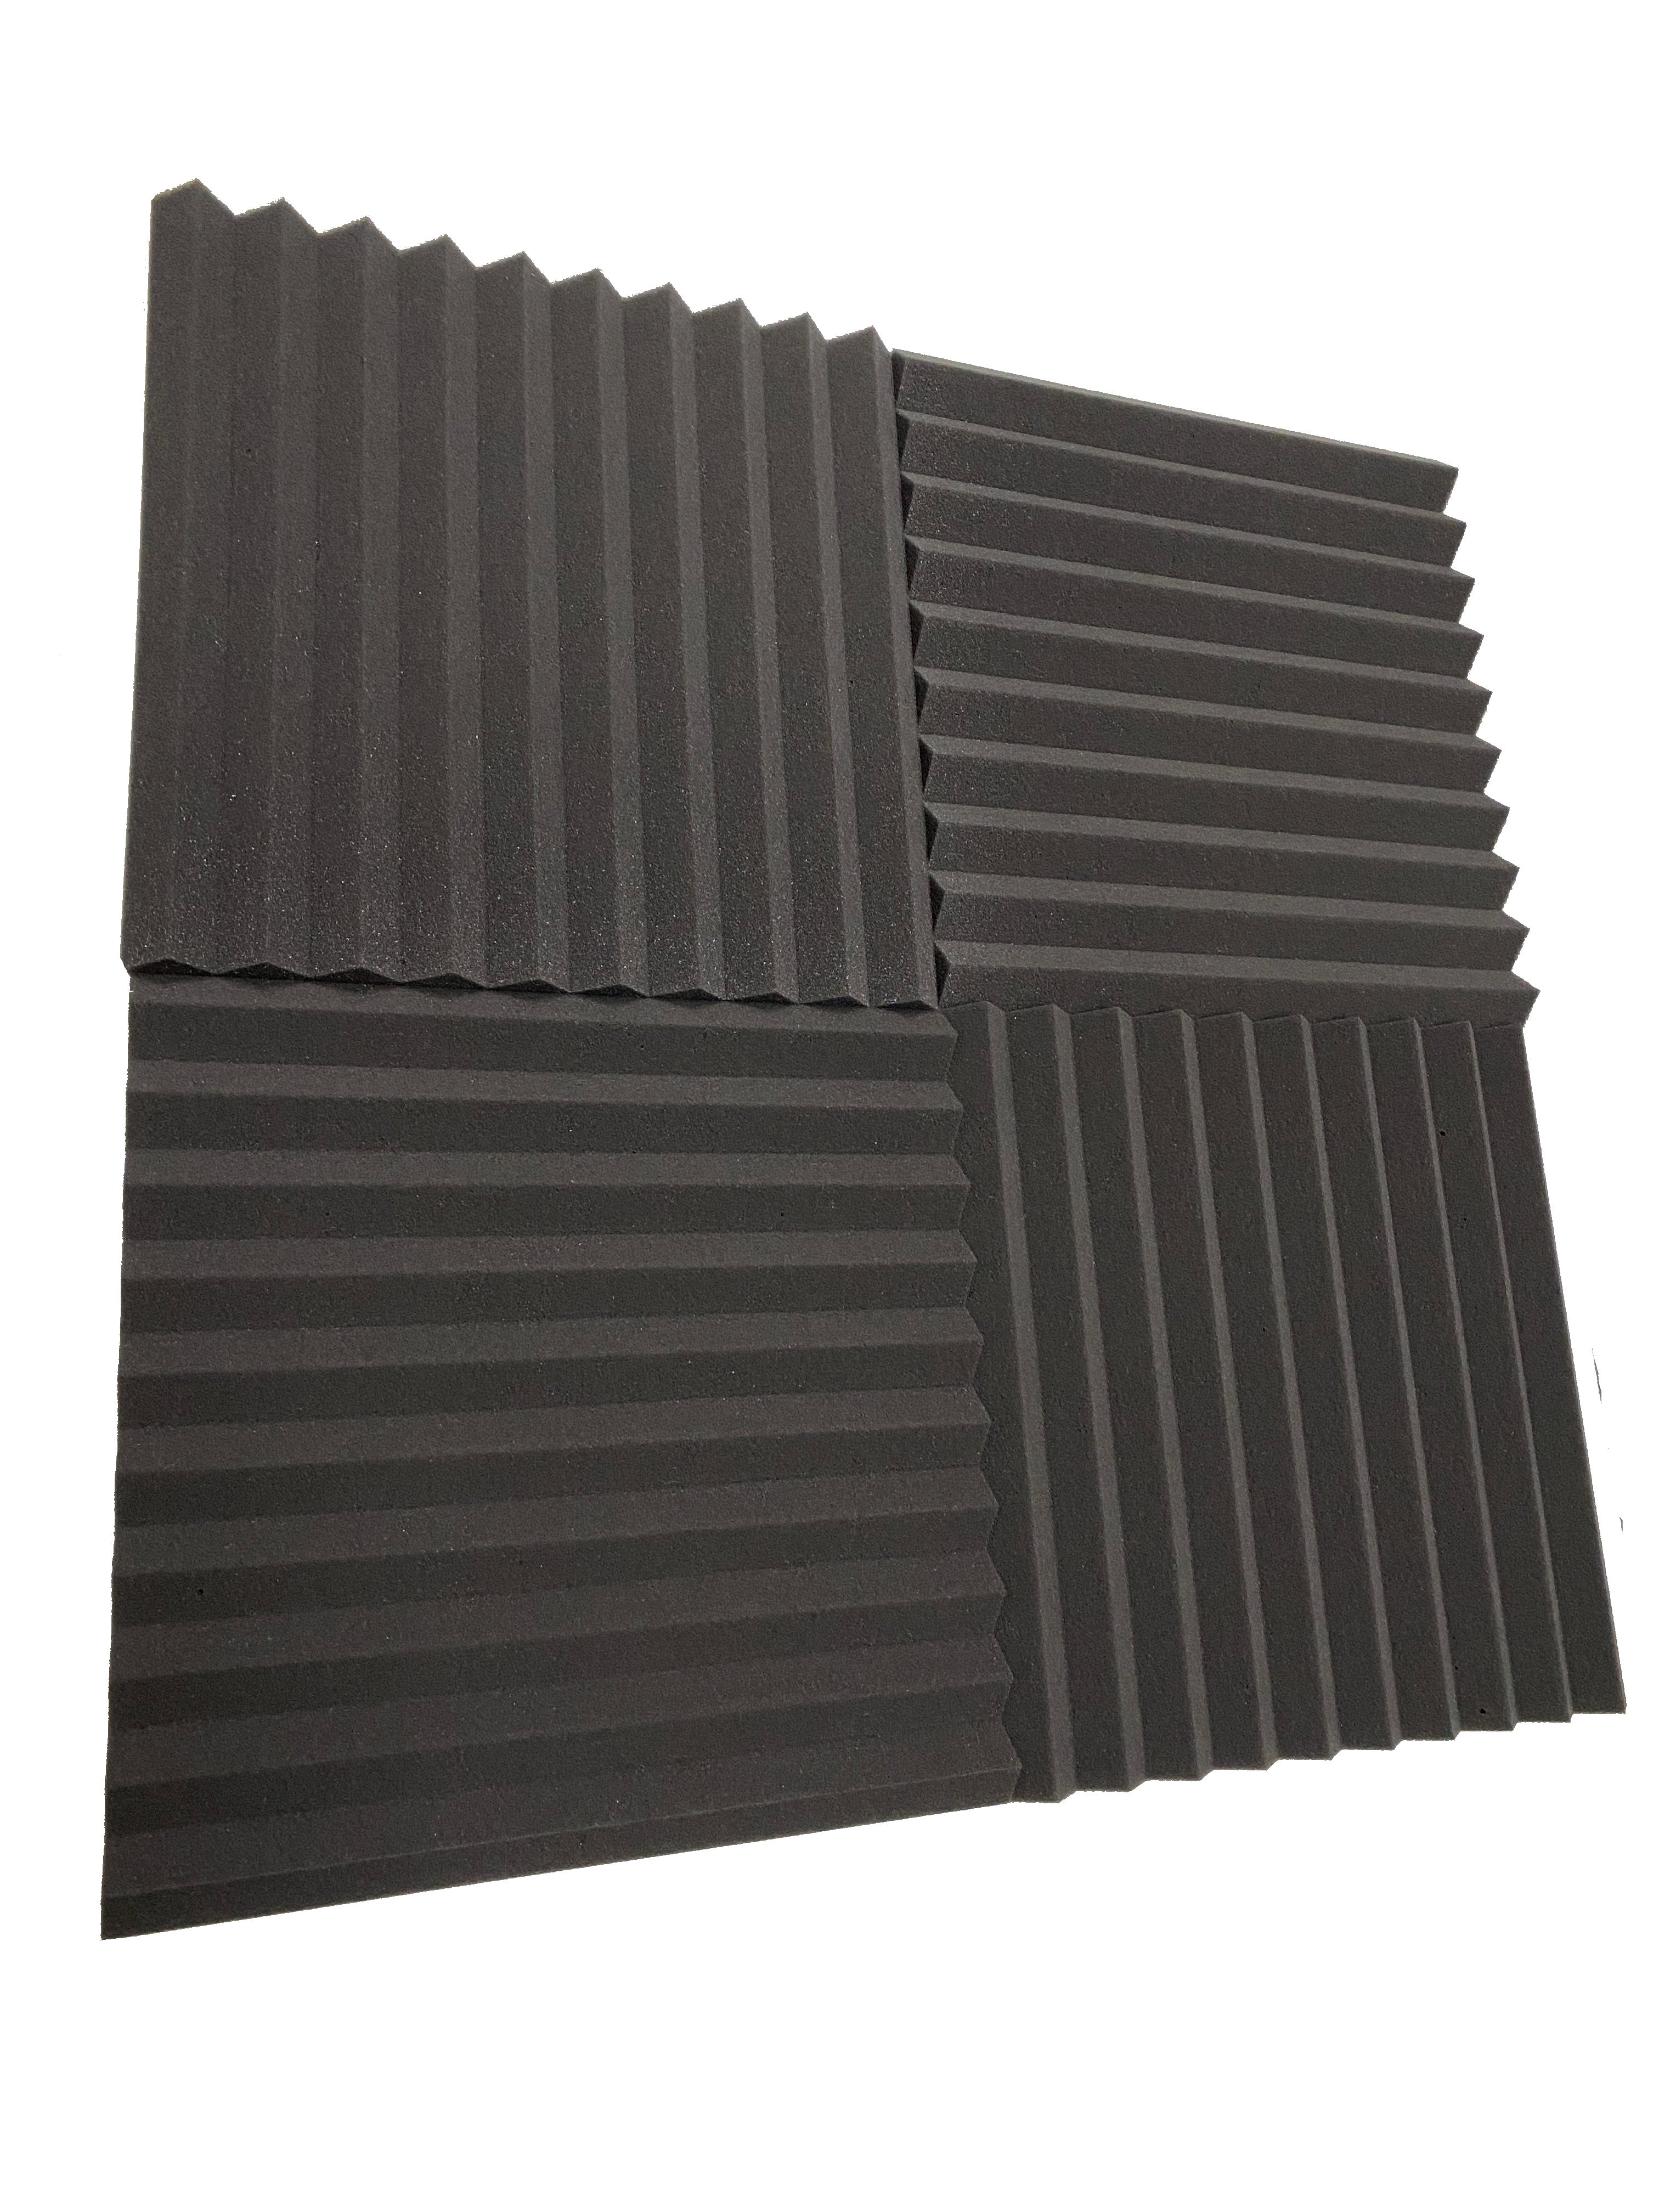 Wedge 15" Acoustic Studio Foam Tile Kit